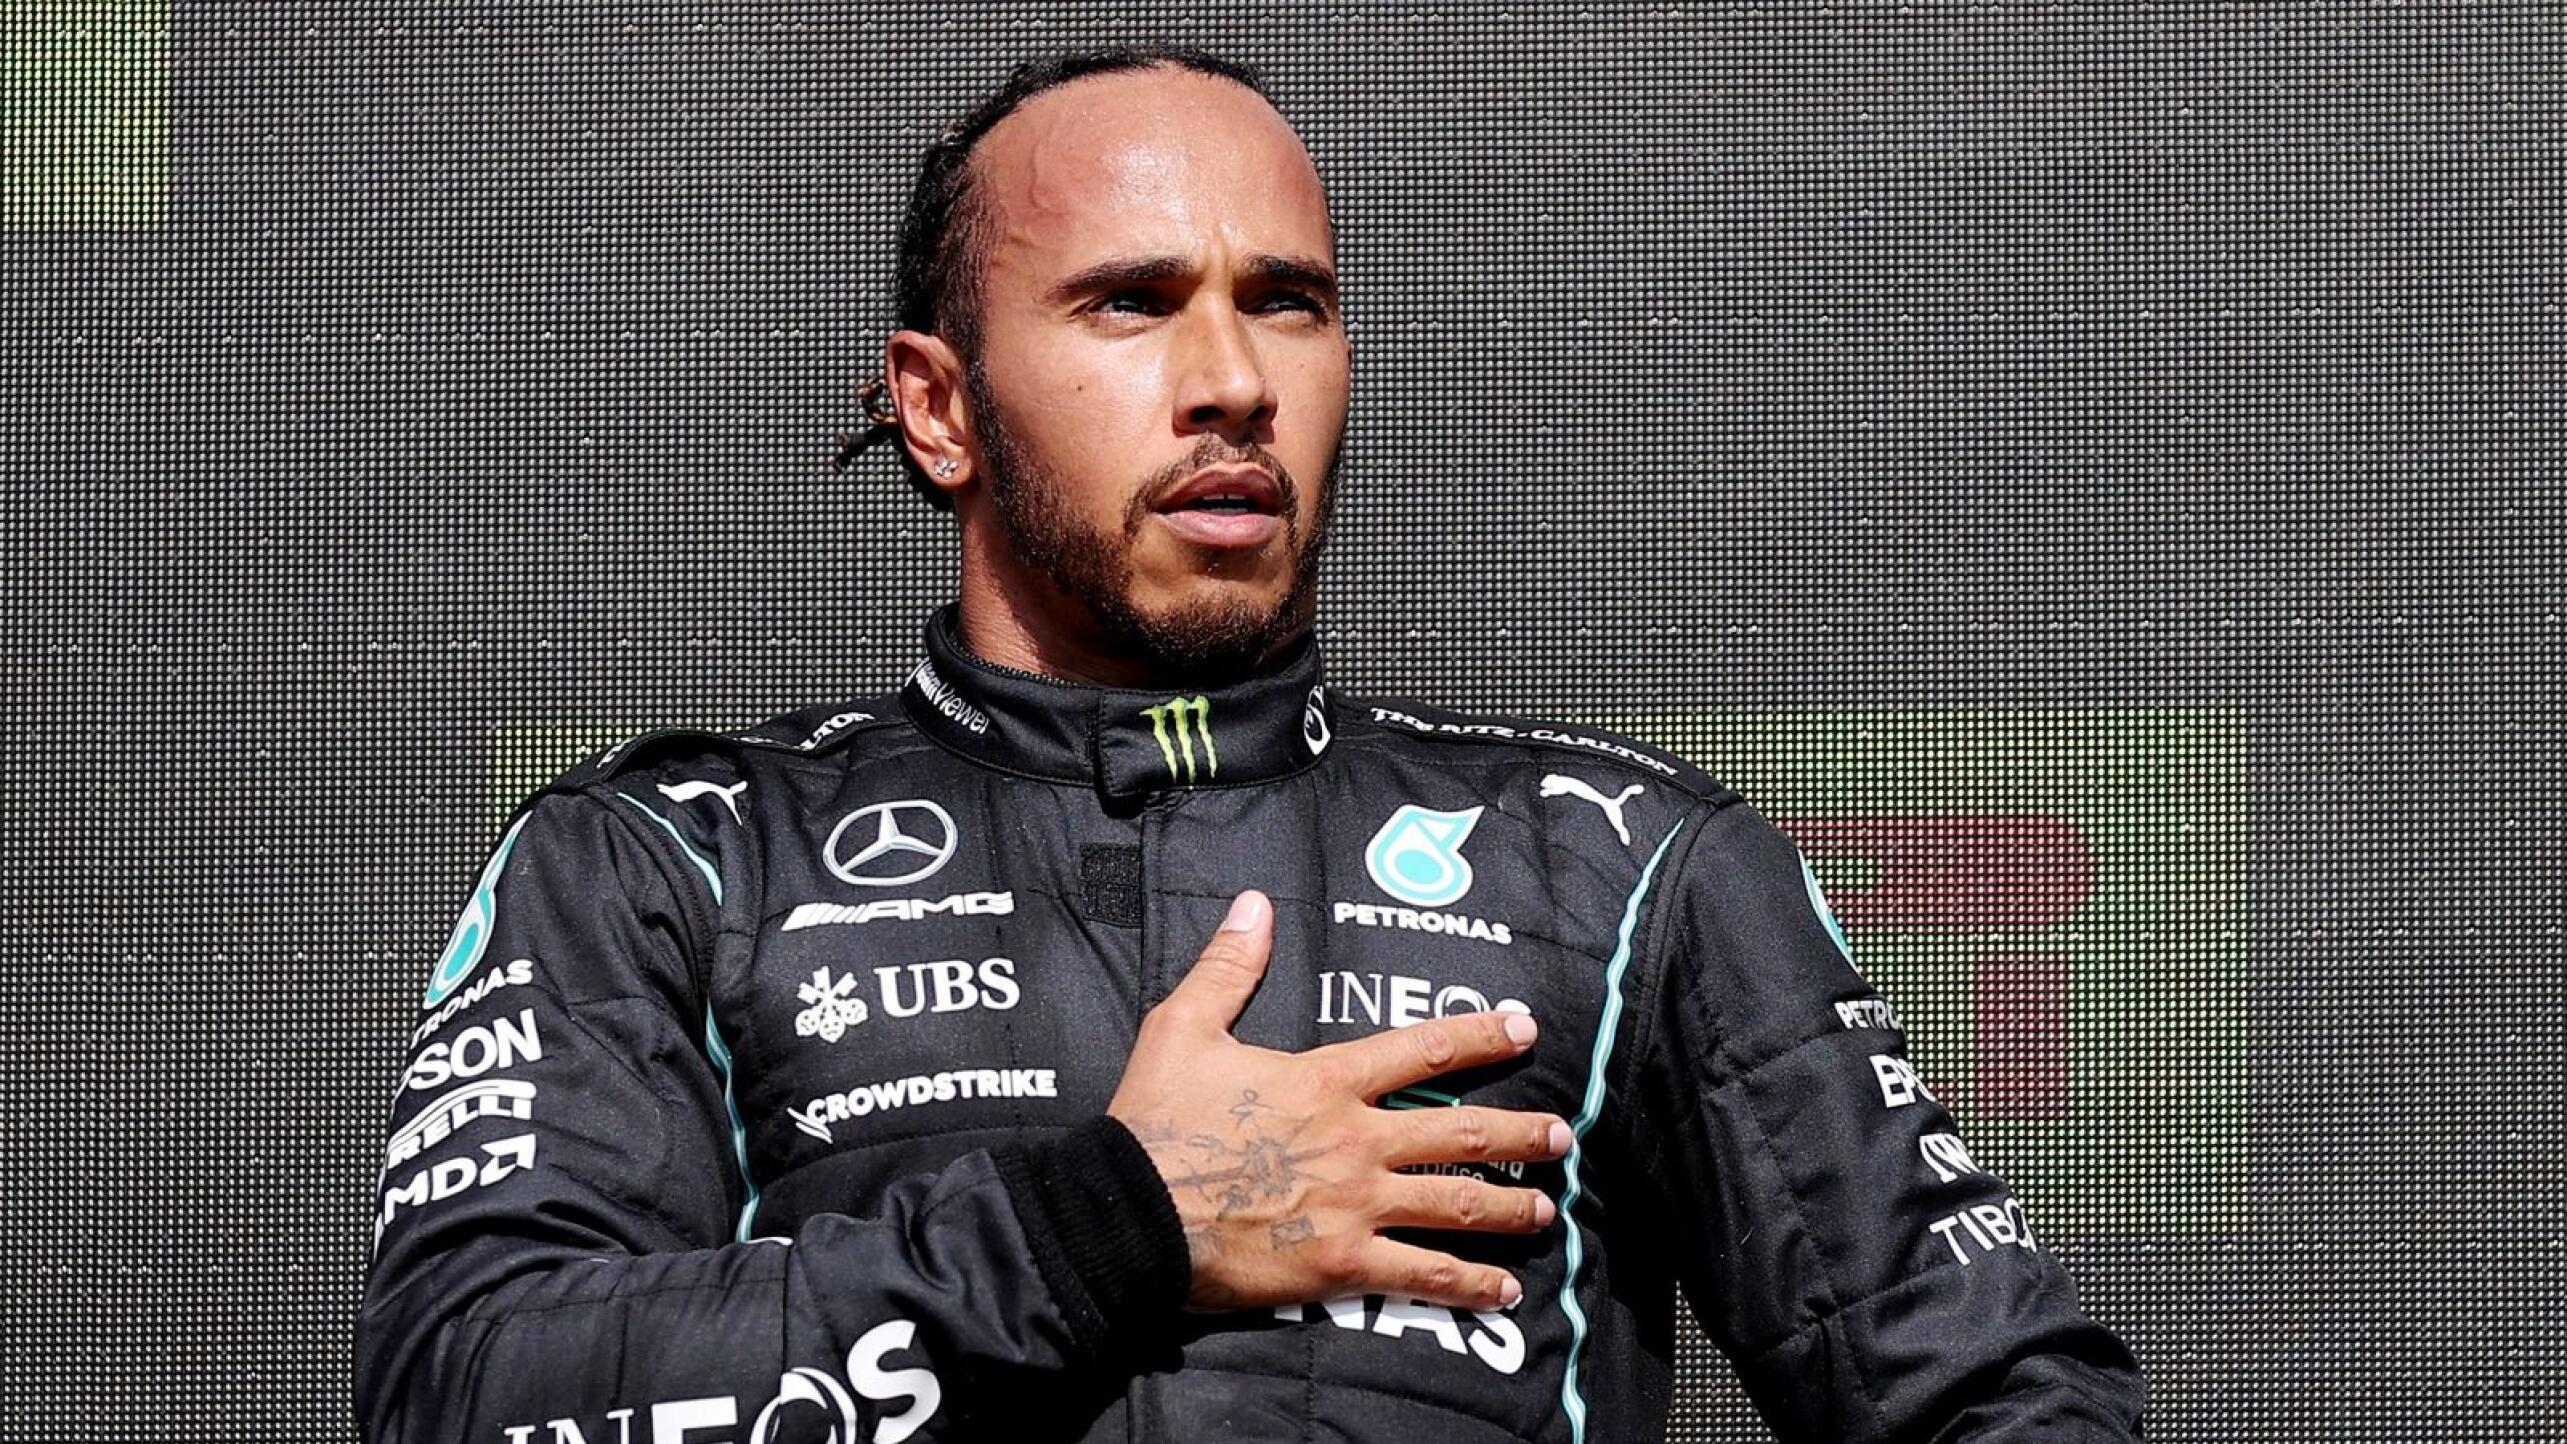 Mercedes' Lewis Hamilton celebrates on the podium after winning the British Grand Prix